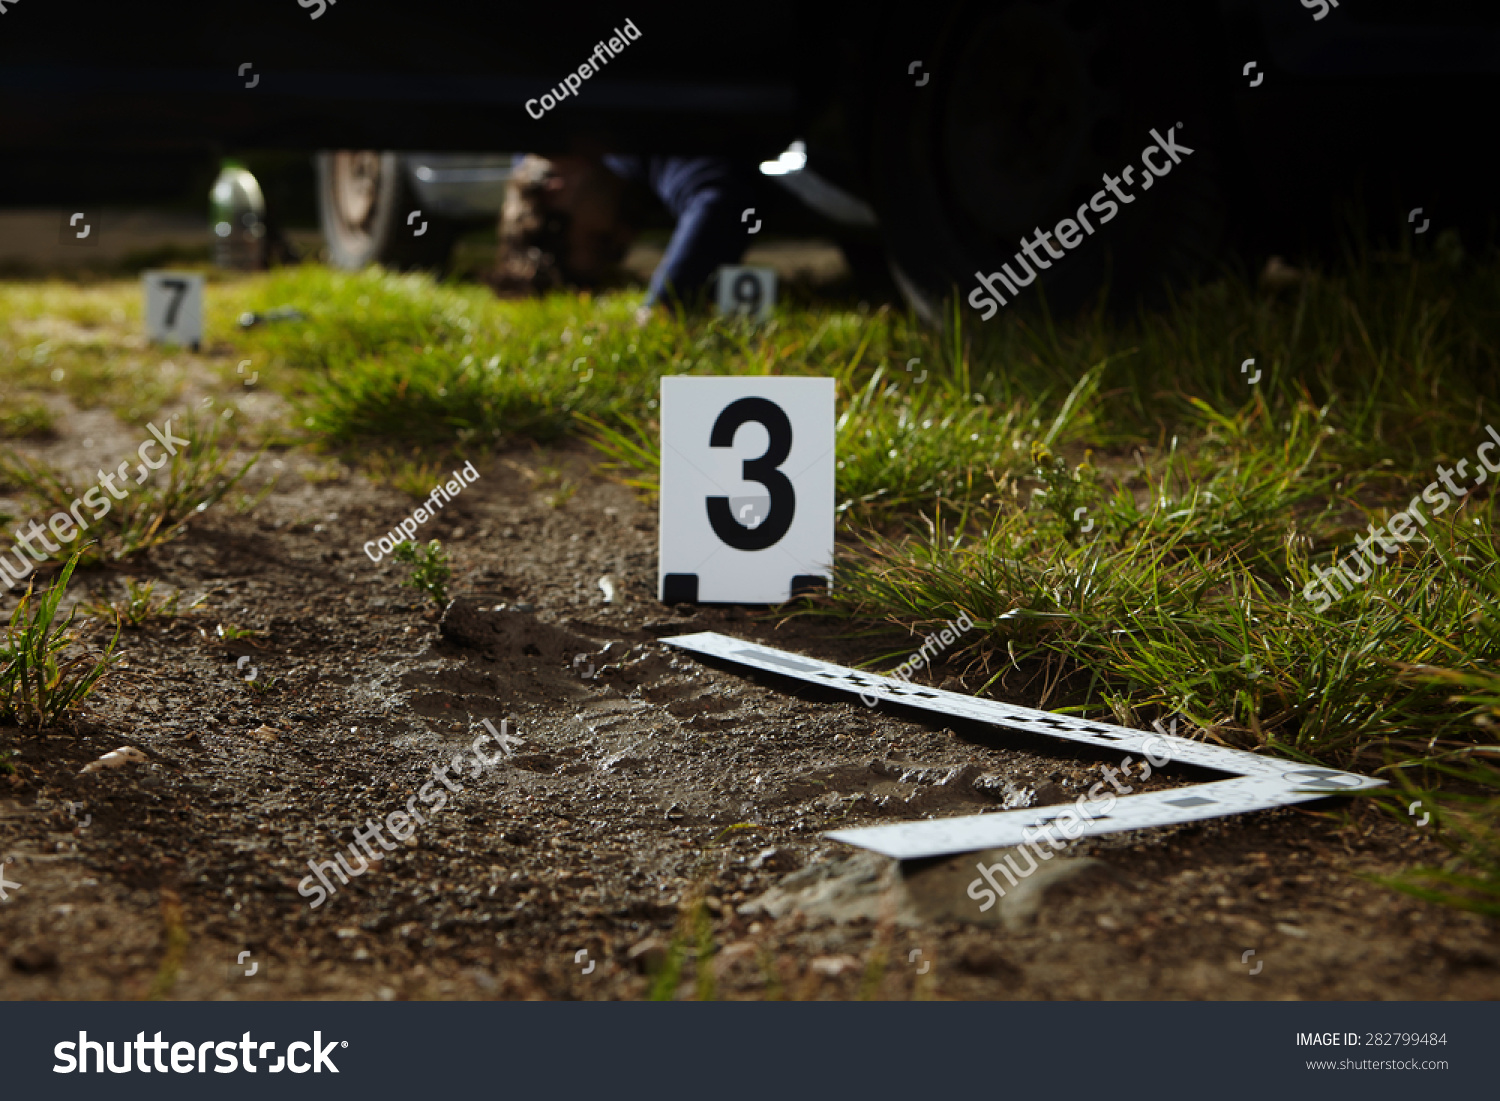 Crime scene investigation - footprint of murder on way #282799484